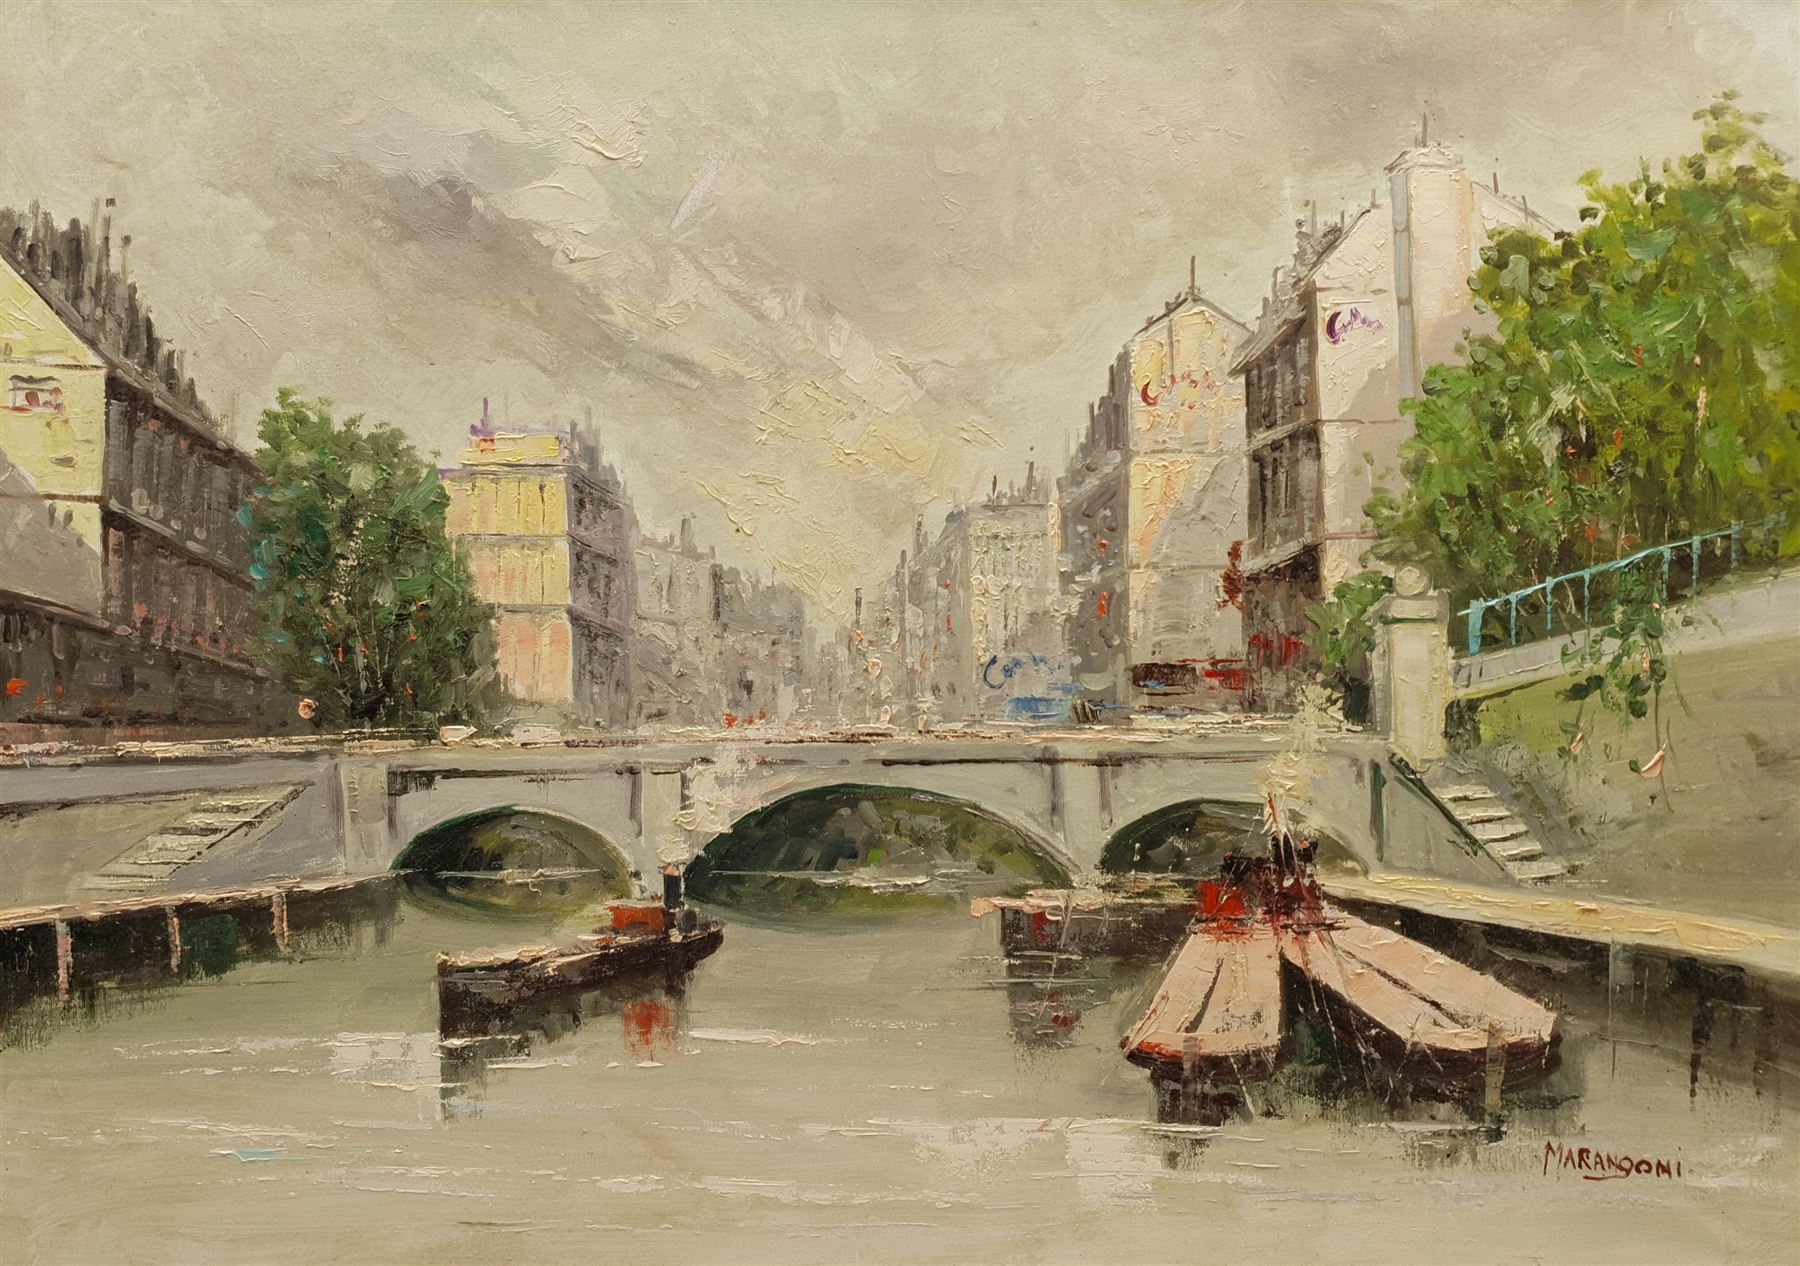 Marangoni (Italian 20th century): City River Scene